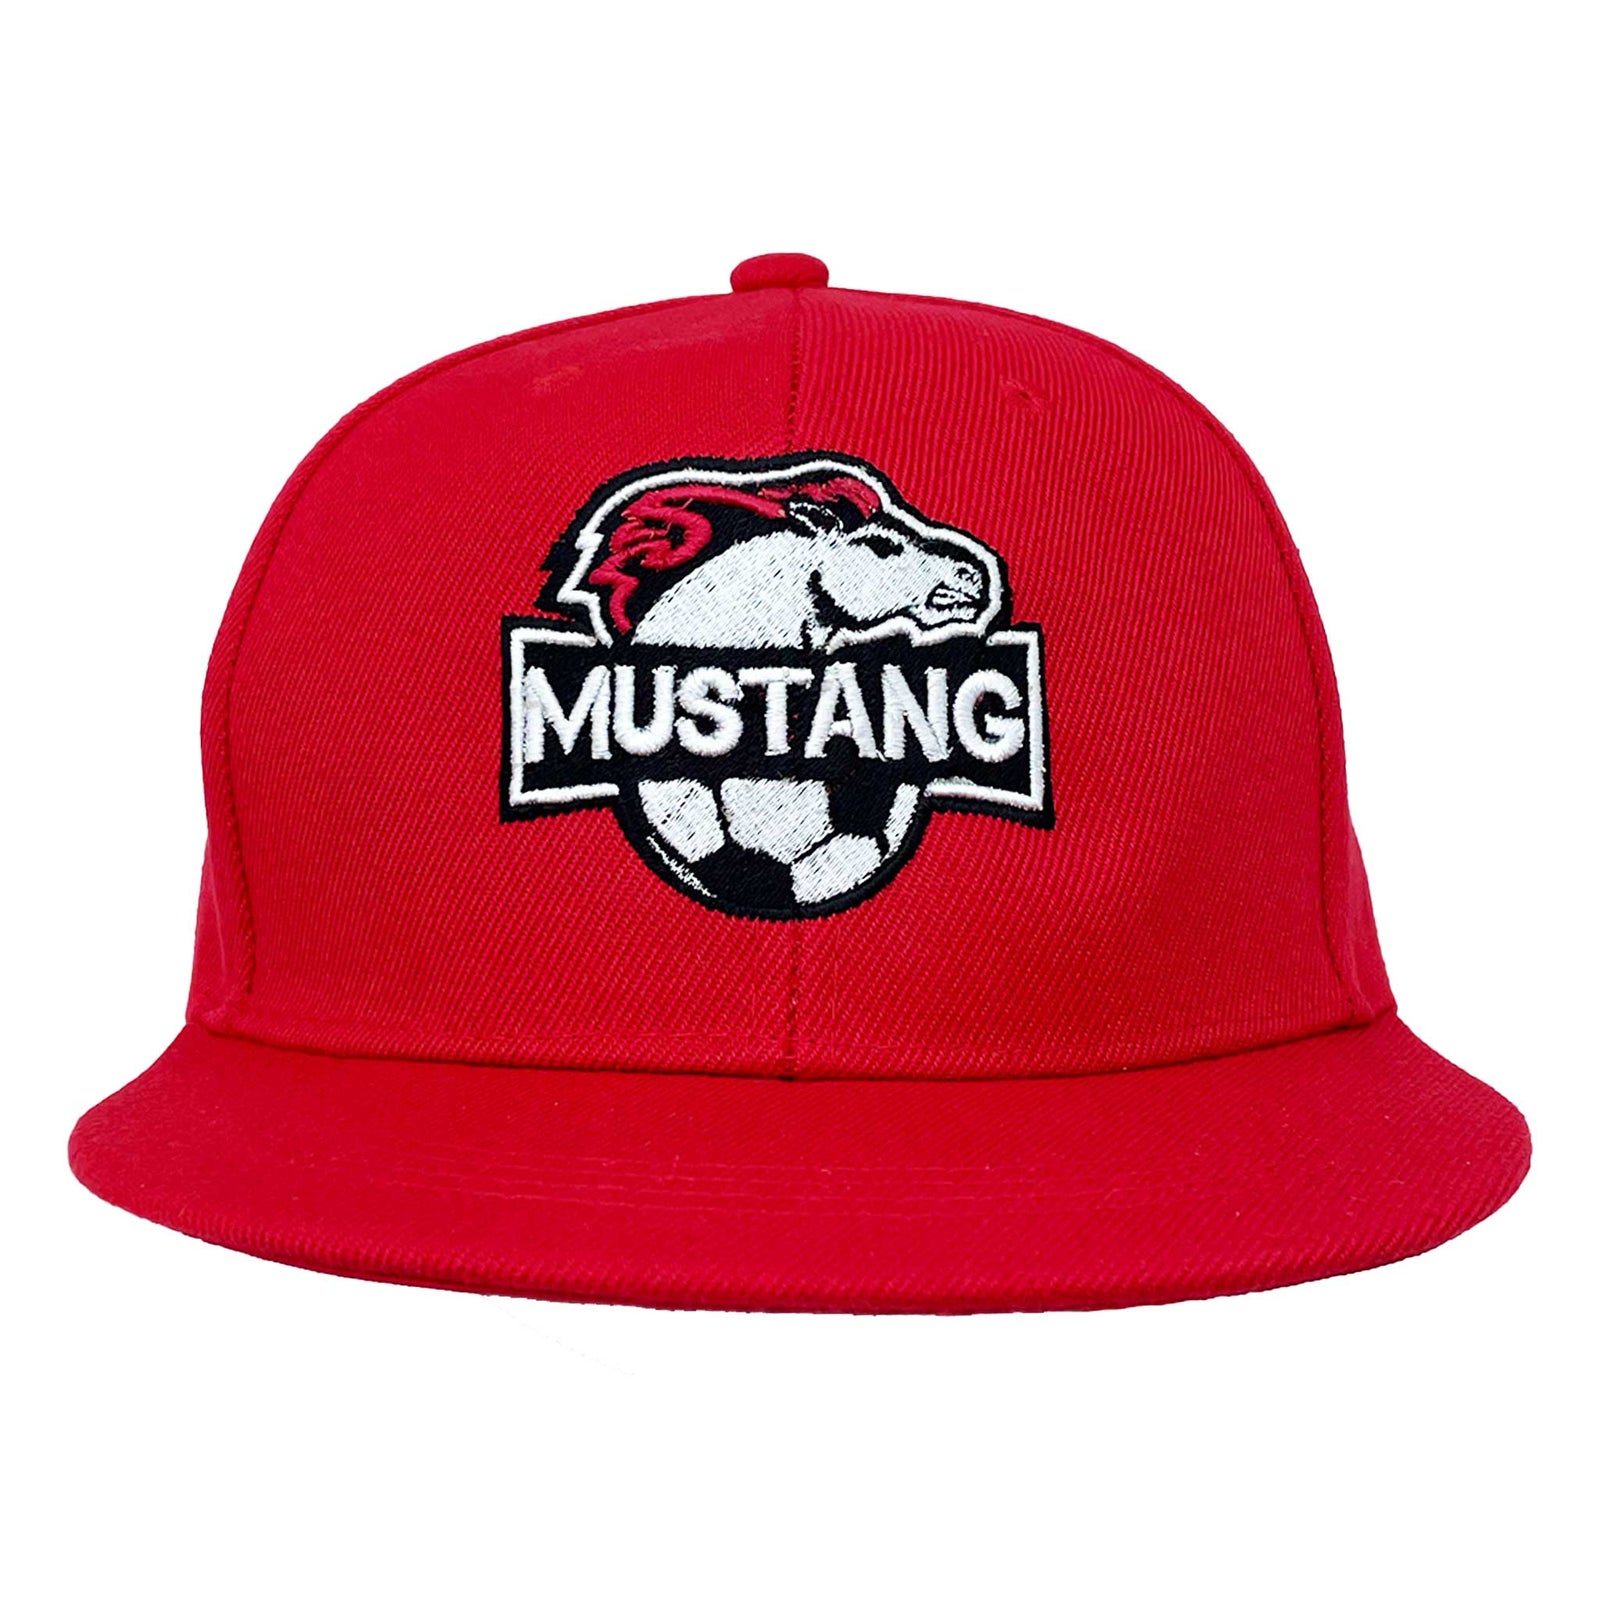 Mustang baseball cap from Pont-Rouge - Soccer Sport Fitness